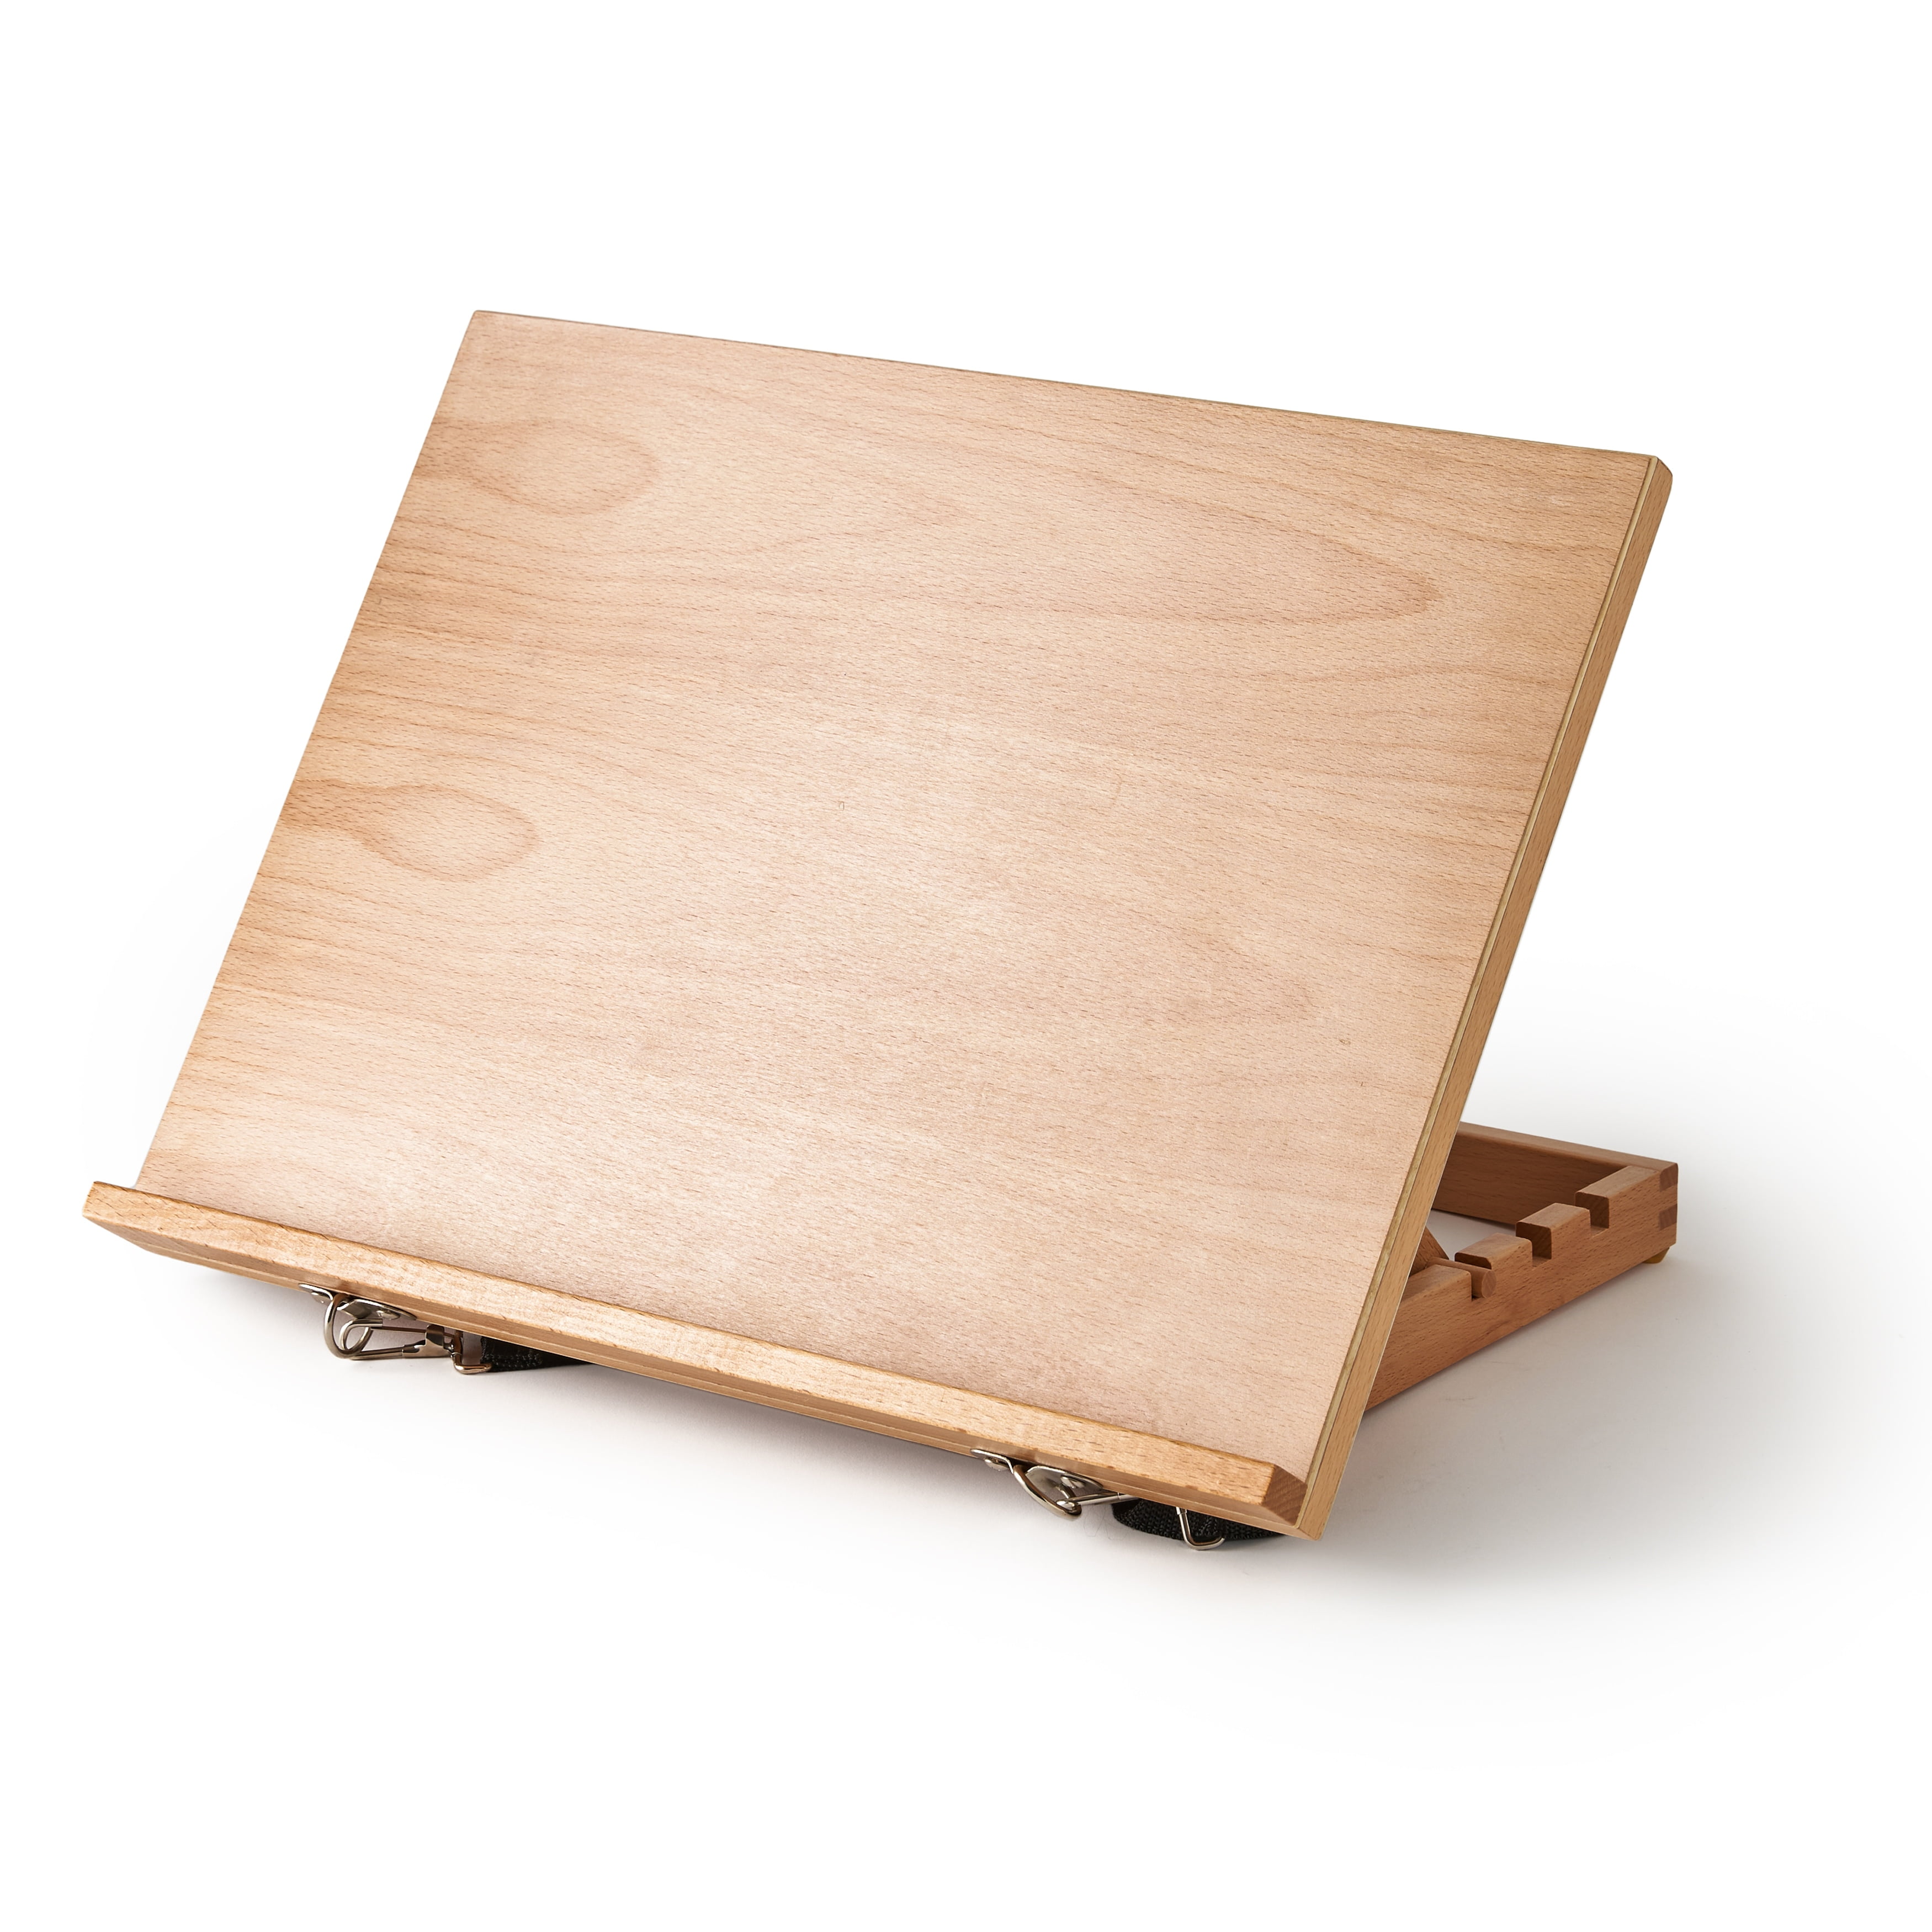 19 All Media Wood Tabletop Easel by Artist's Loft™